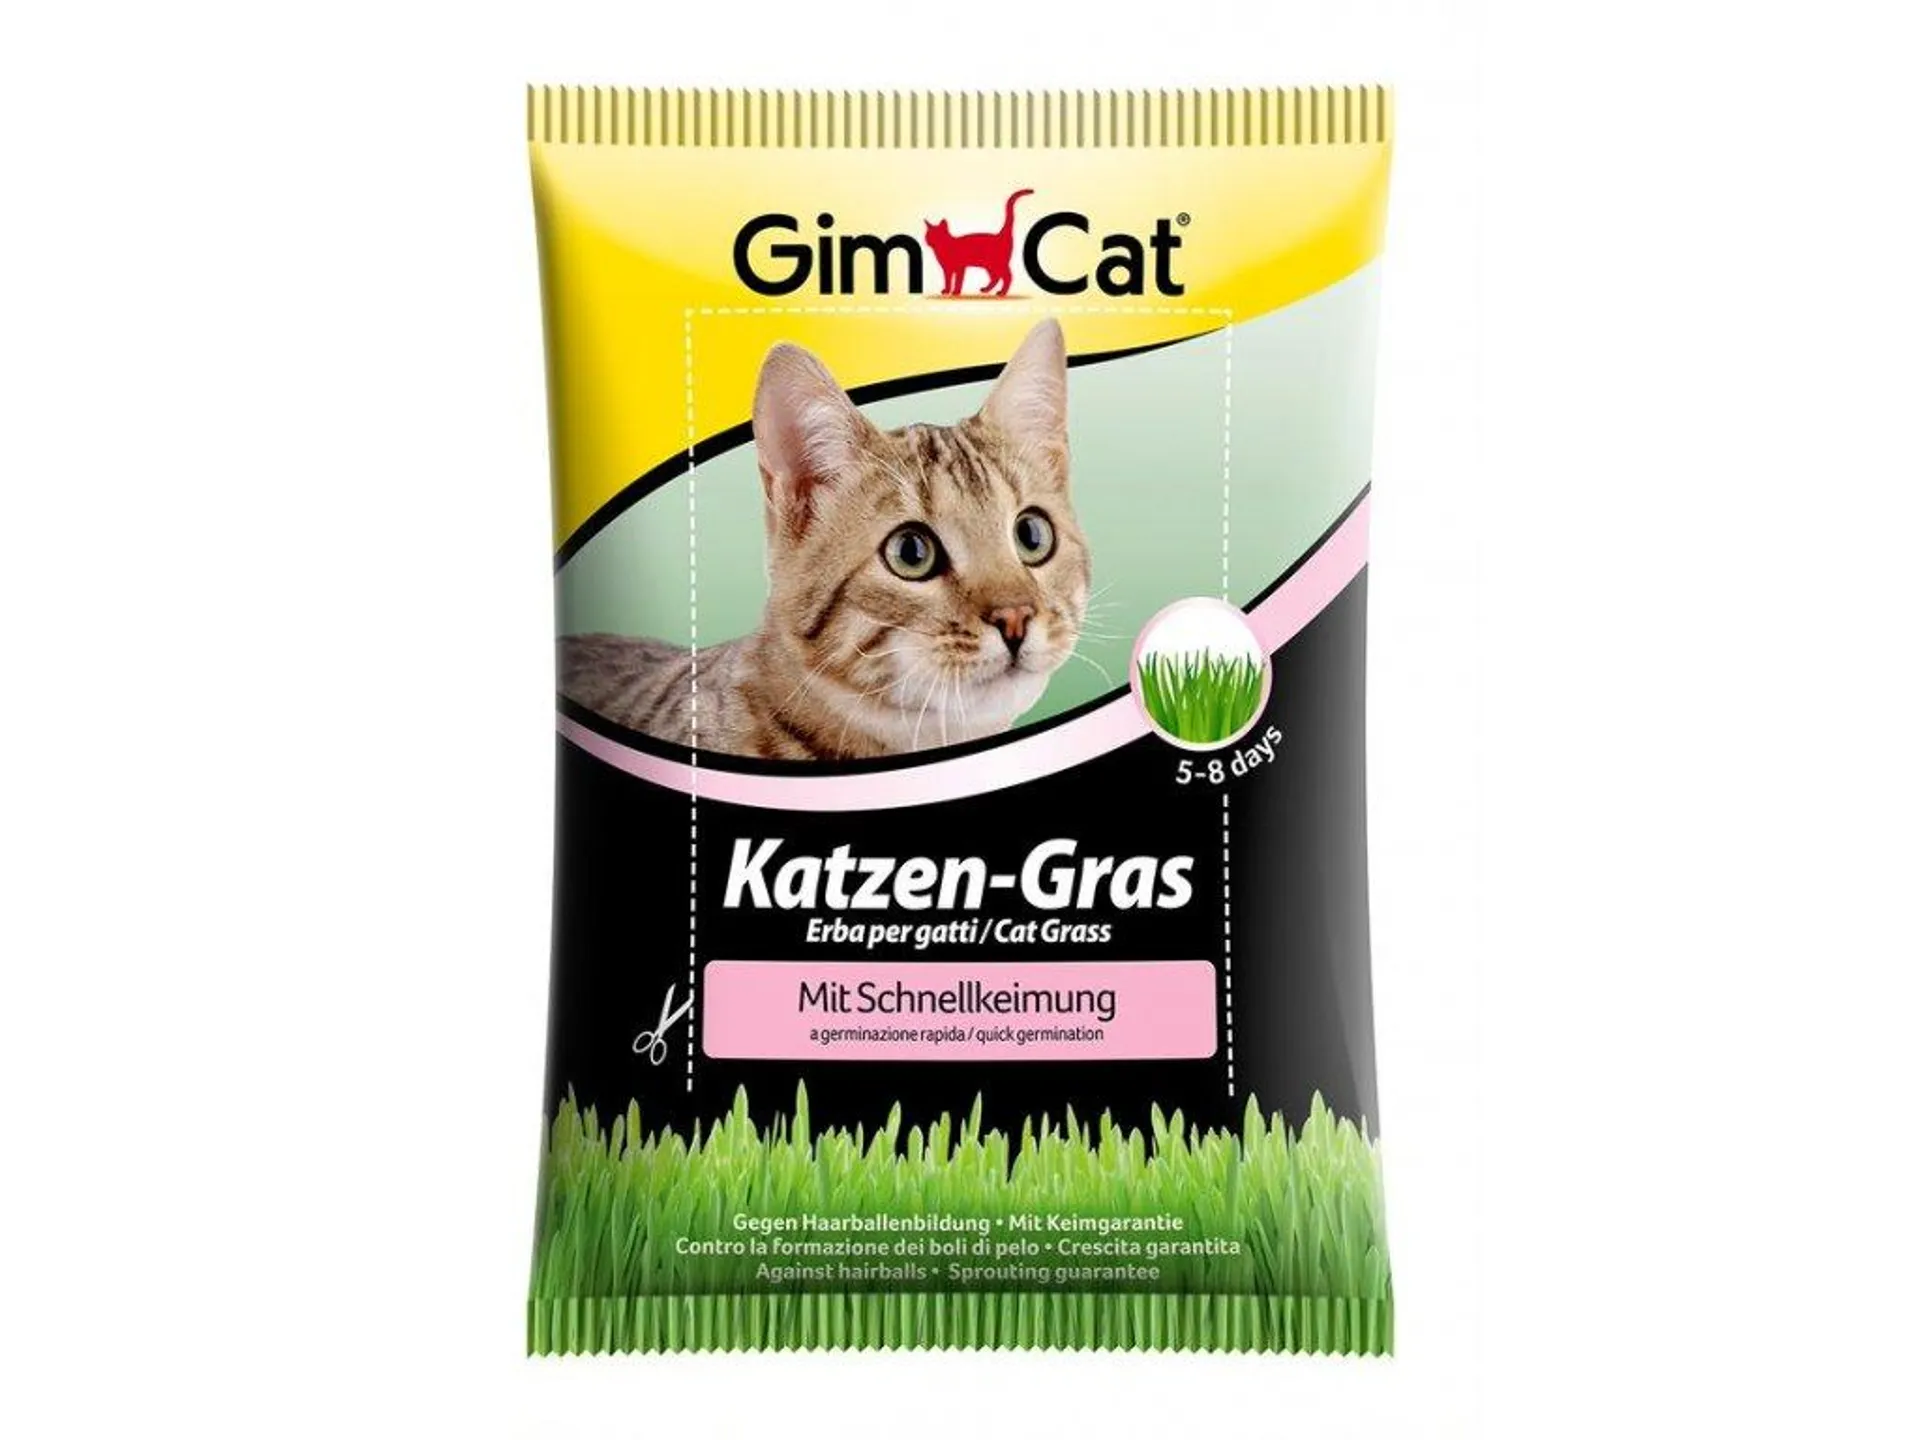 Gimpet Katzen-Gras mačacia tráva 100g